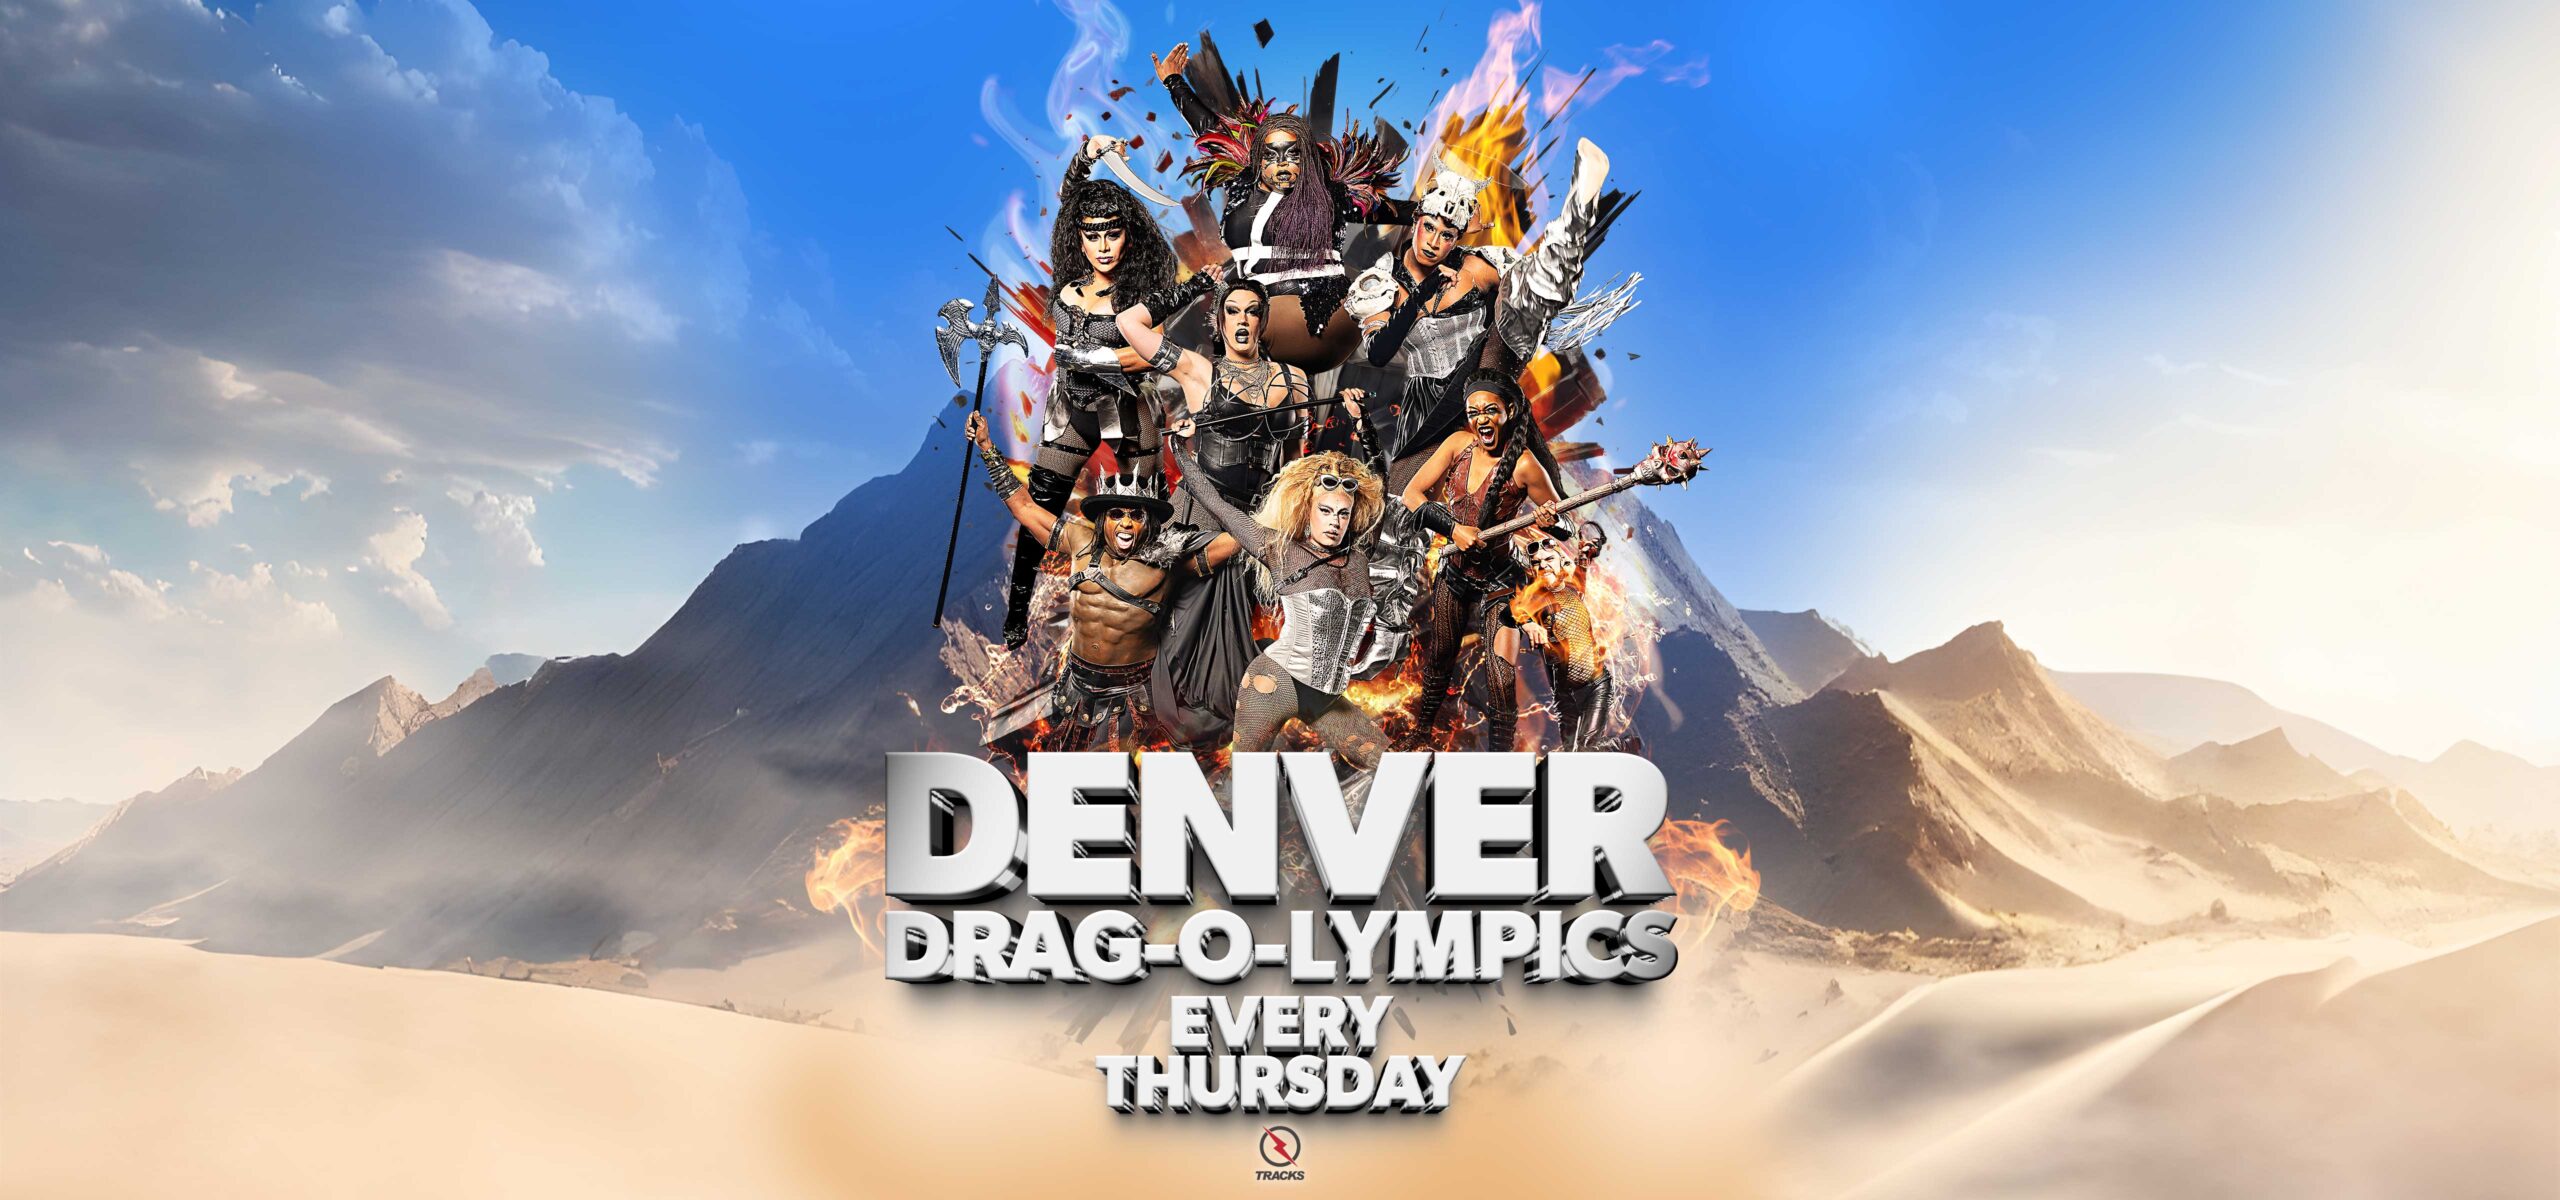 18+ Denver Drag-O-lympics – Every Thurdsay